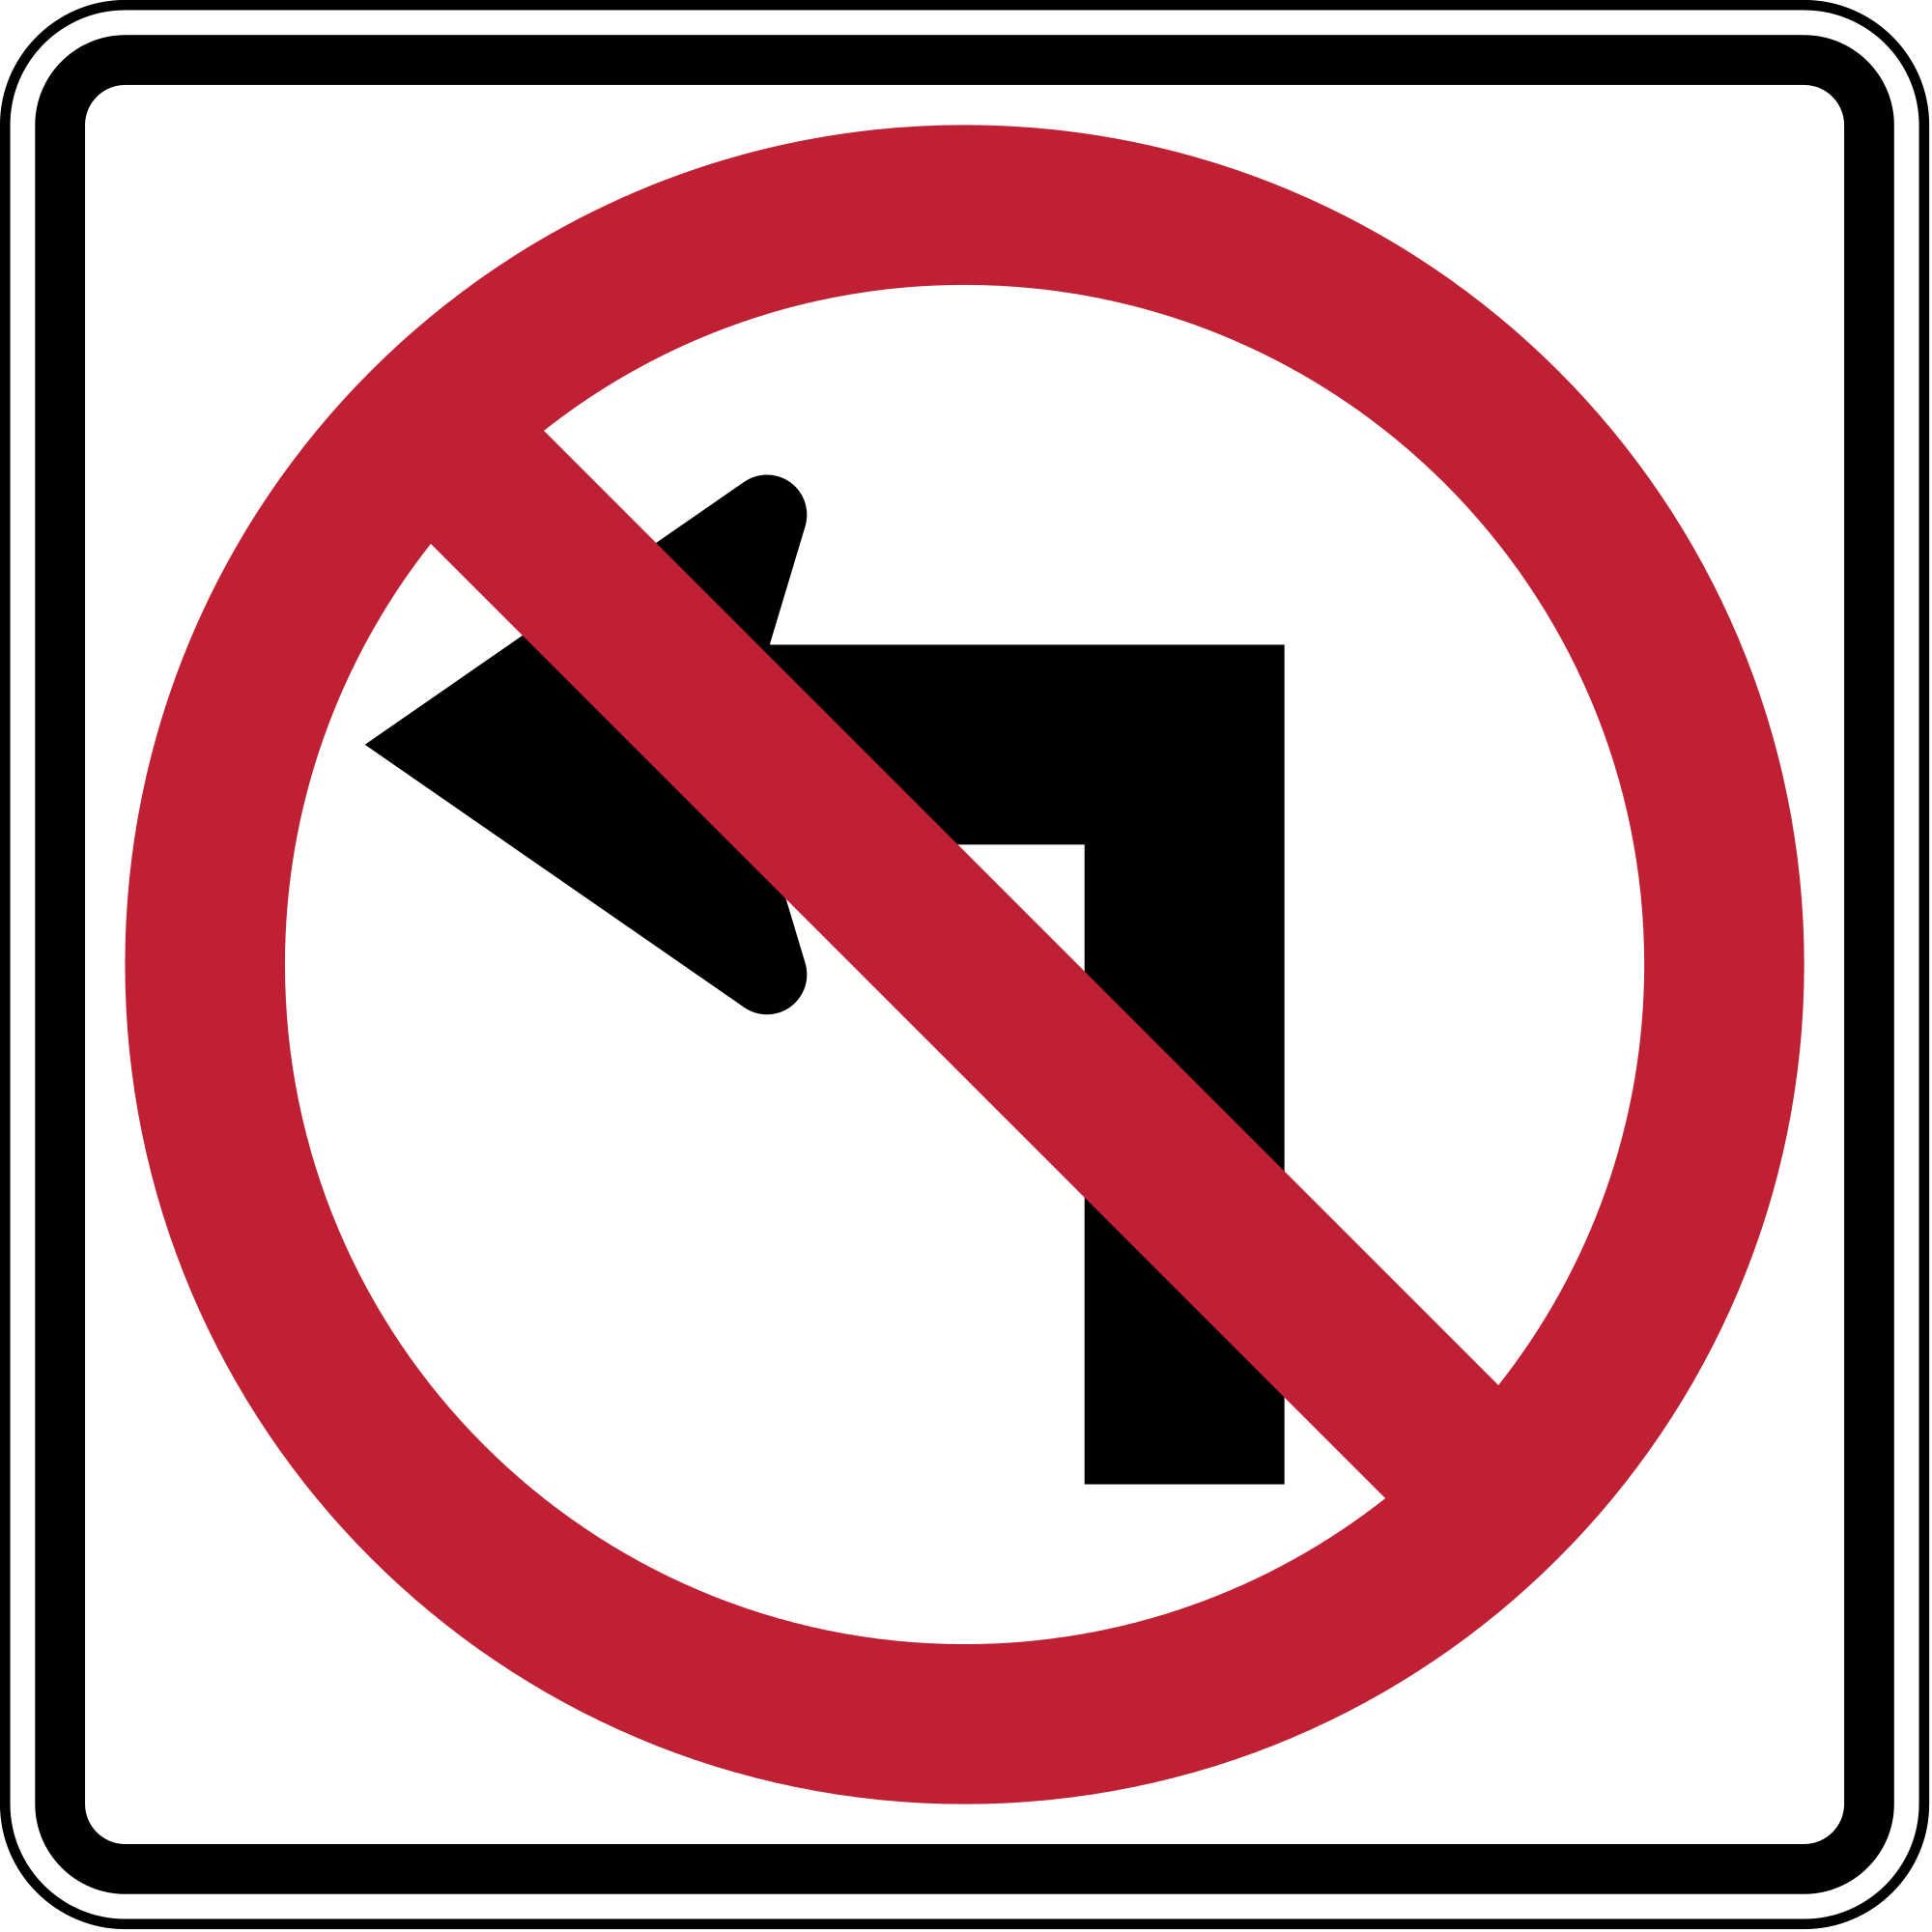 Traffic sign design - Wikipedia, the free encyclopedia